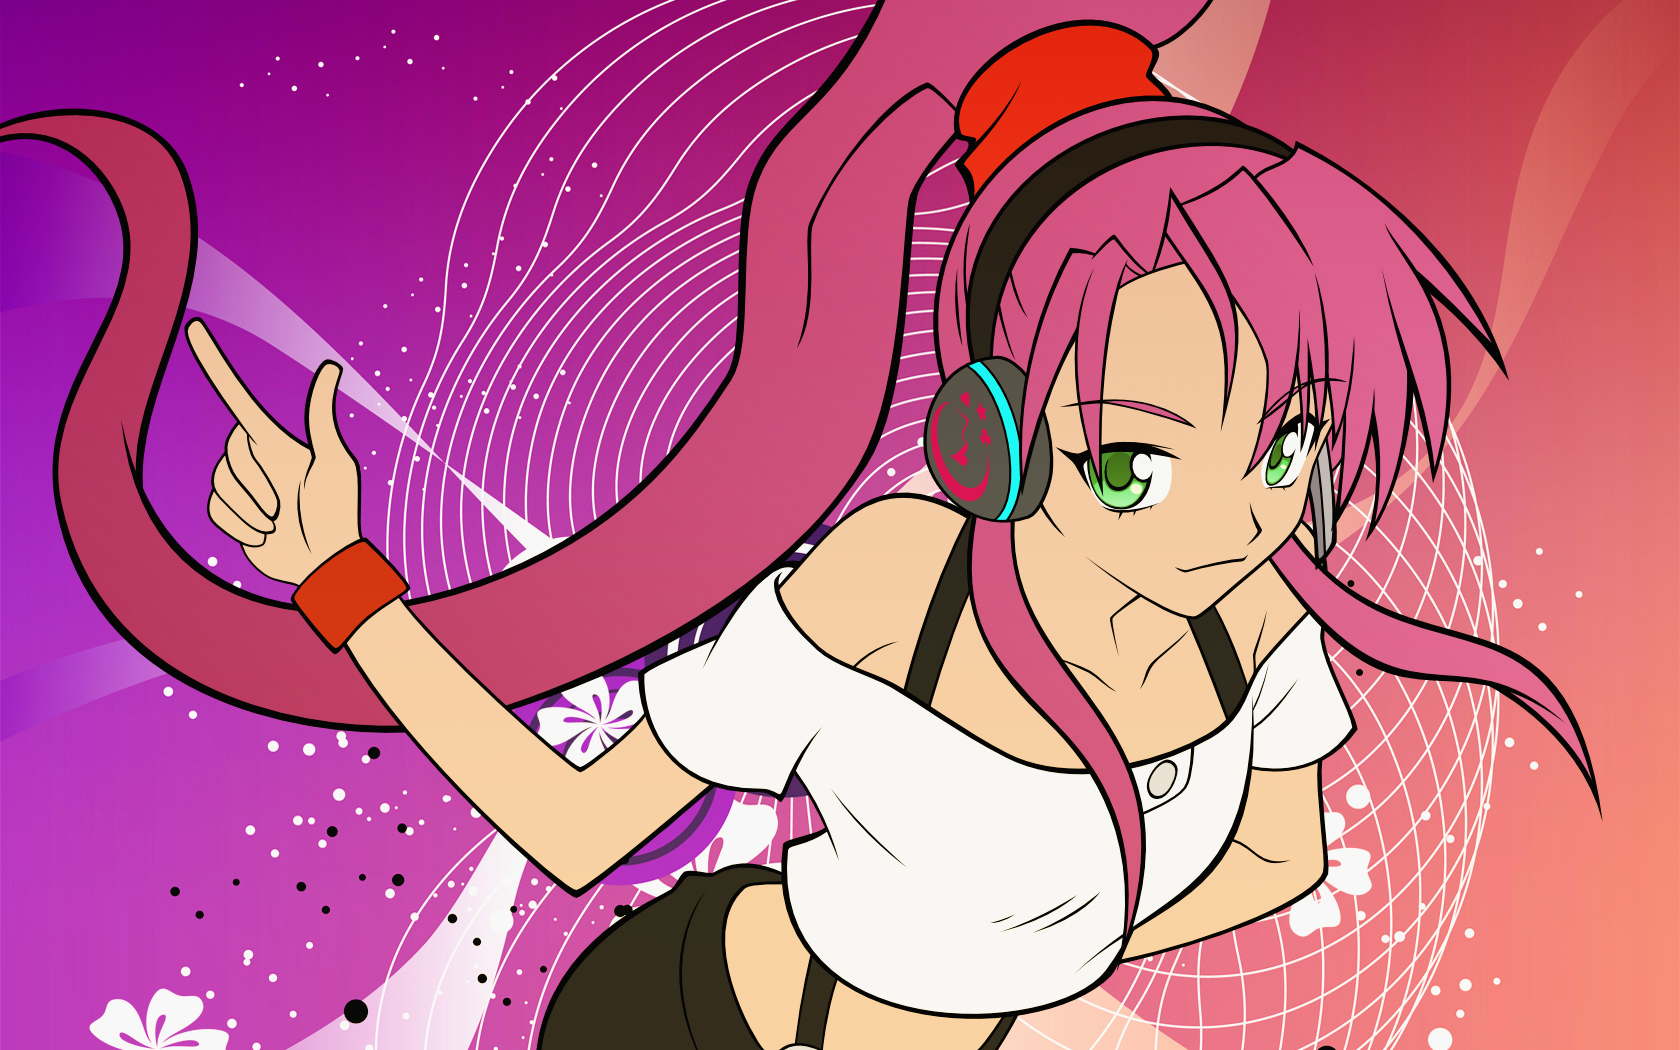 Anime Basquash! HD Wallpaper | Background Image